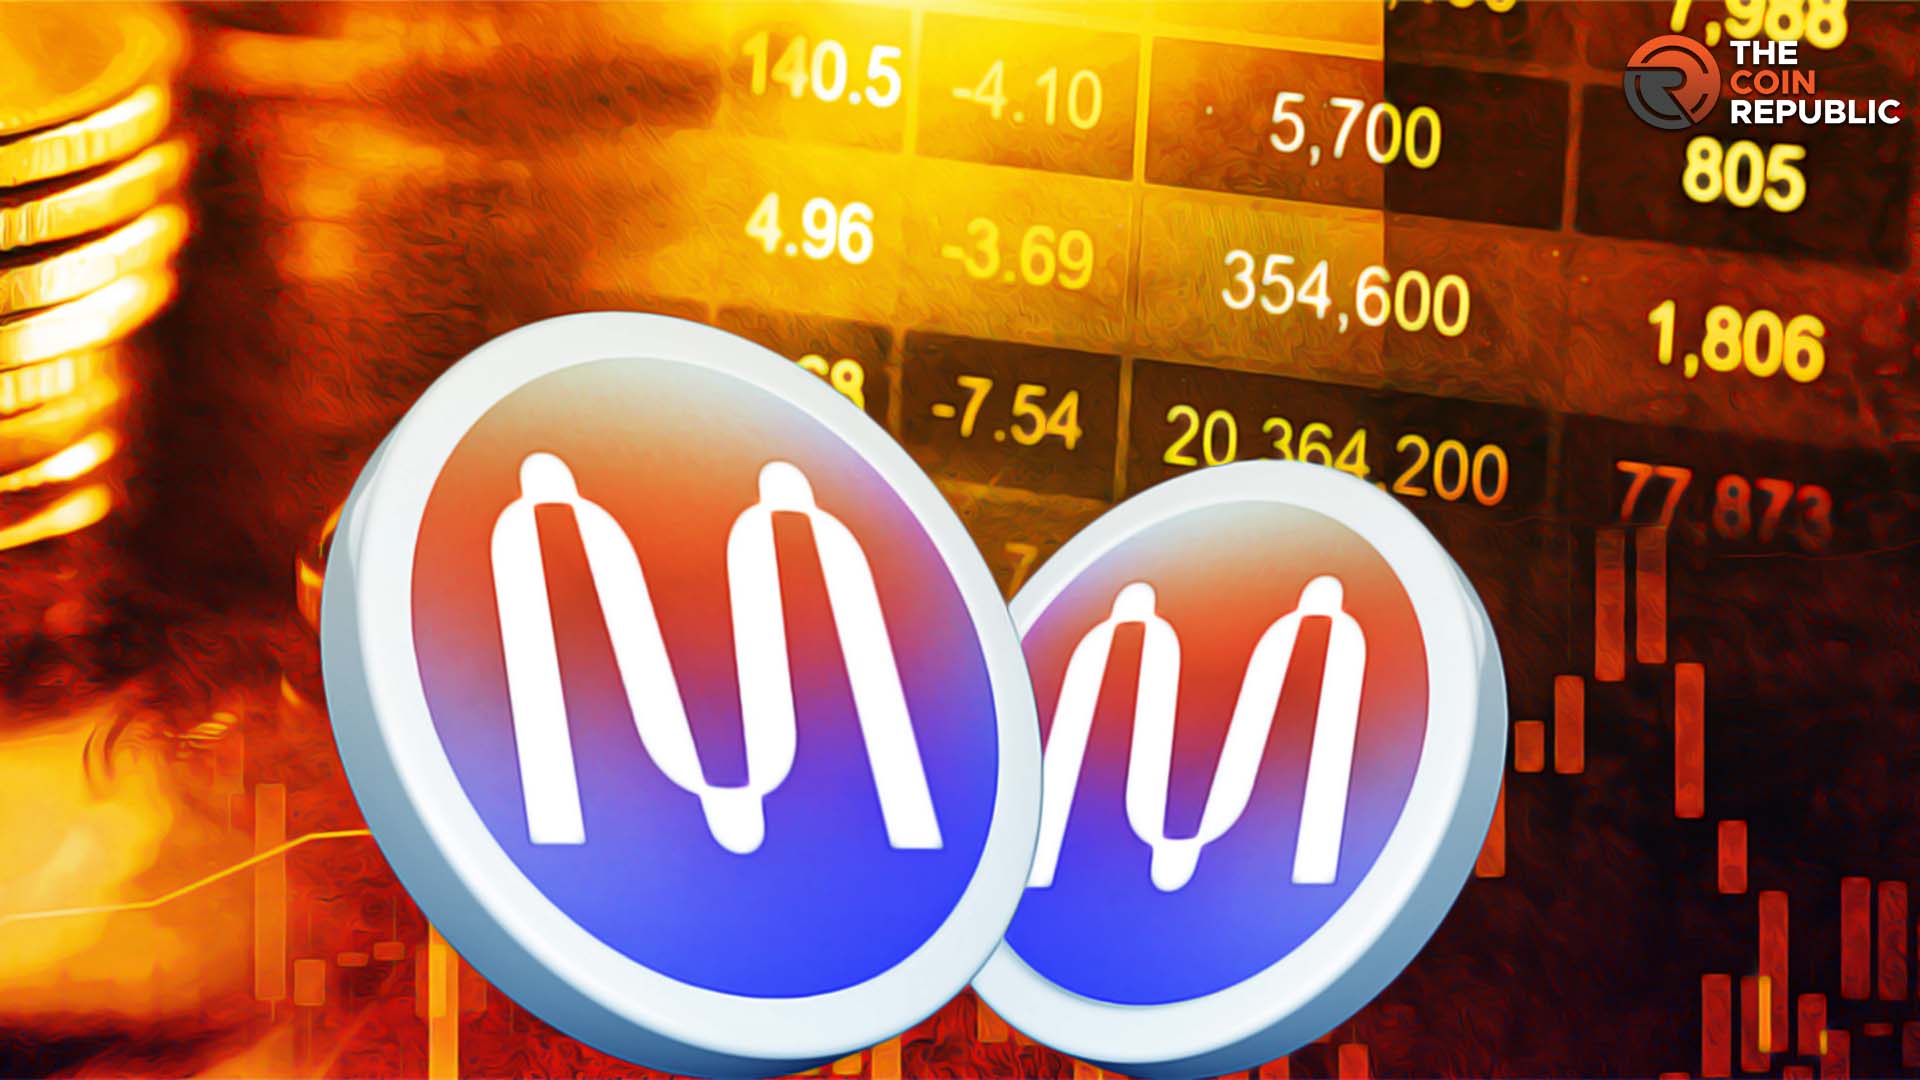 Mina Price Prediction: Mina Price Stays Below $0.50 Level 